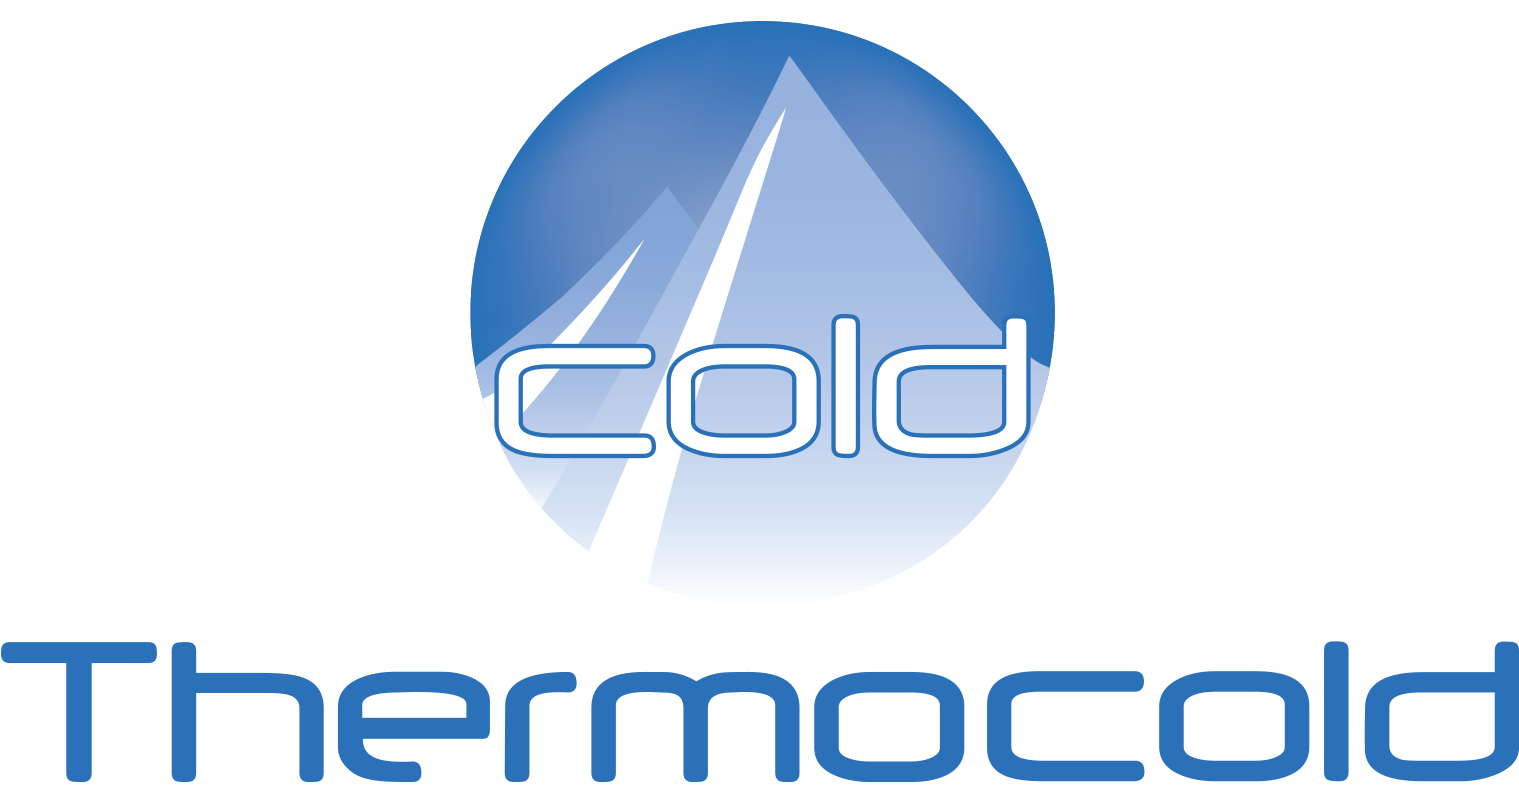 Thermocold logo